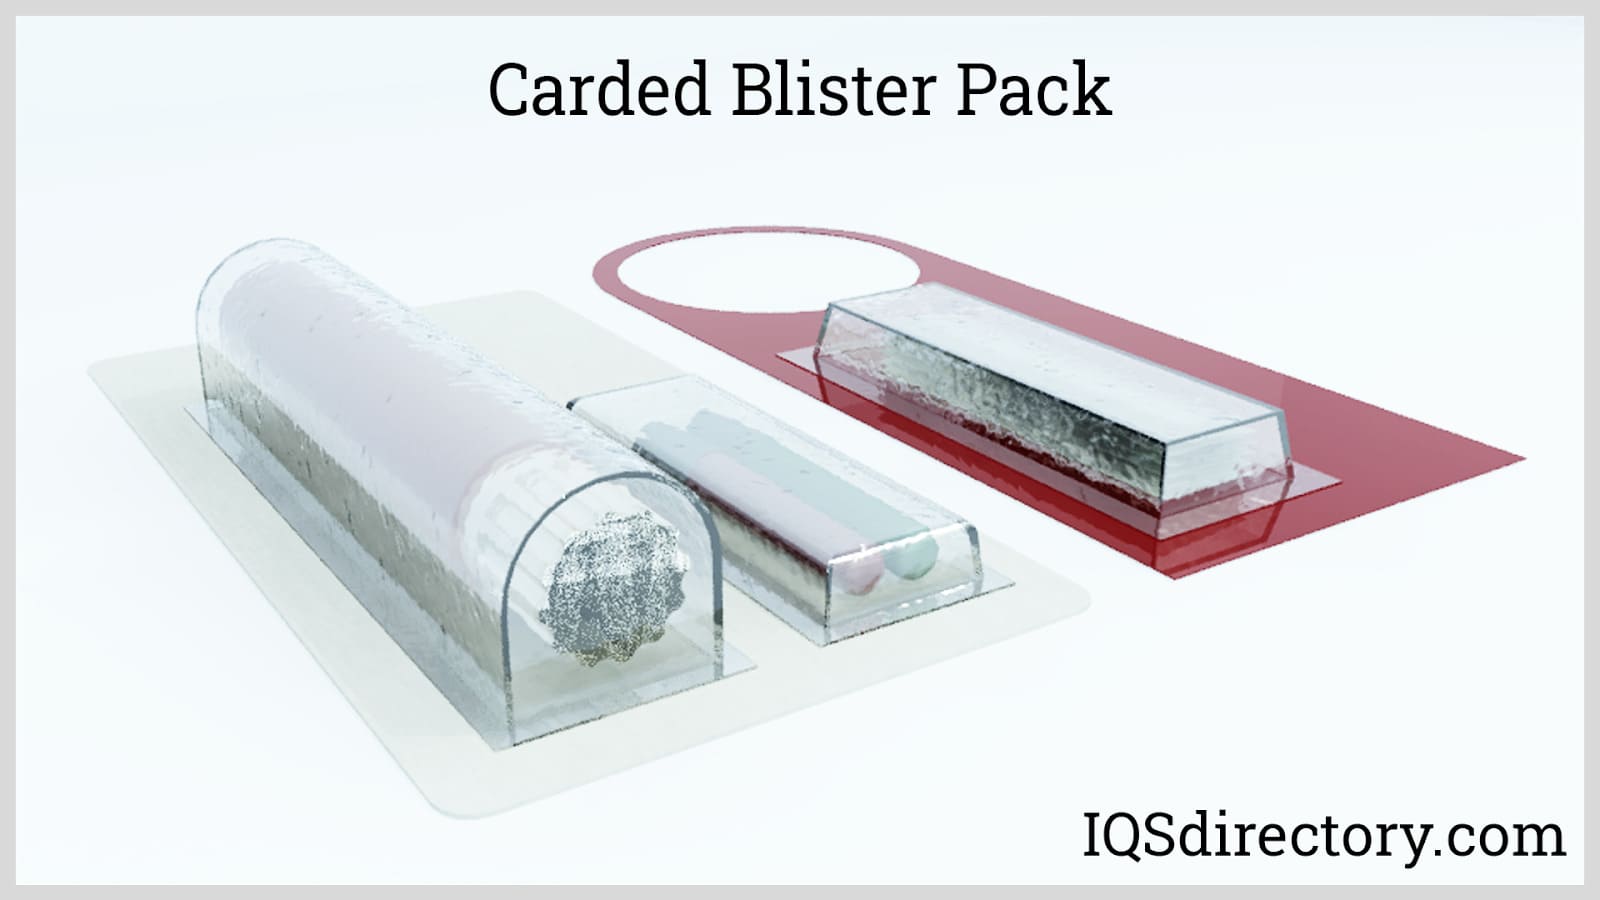 Carded Blister Pack